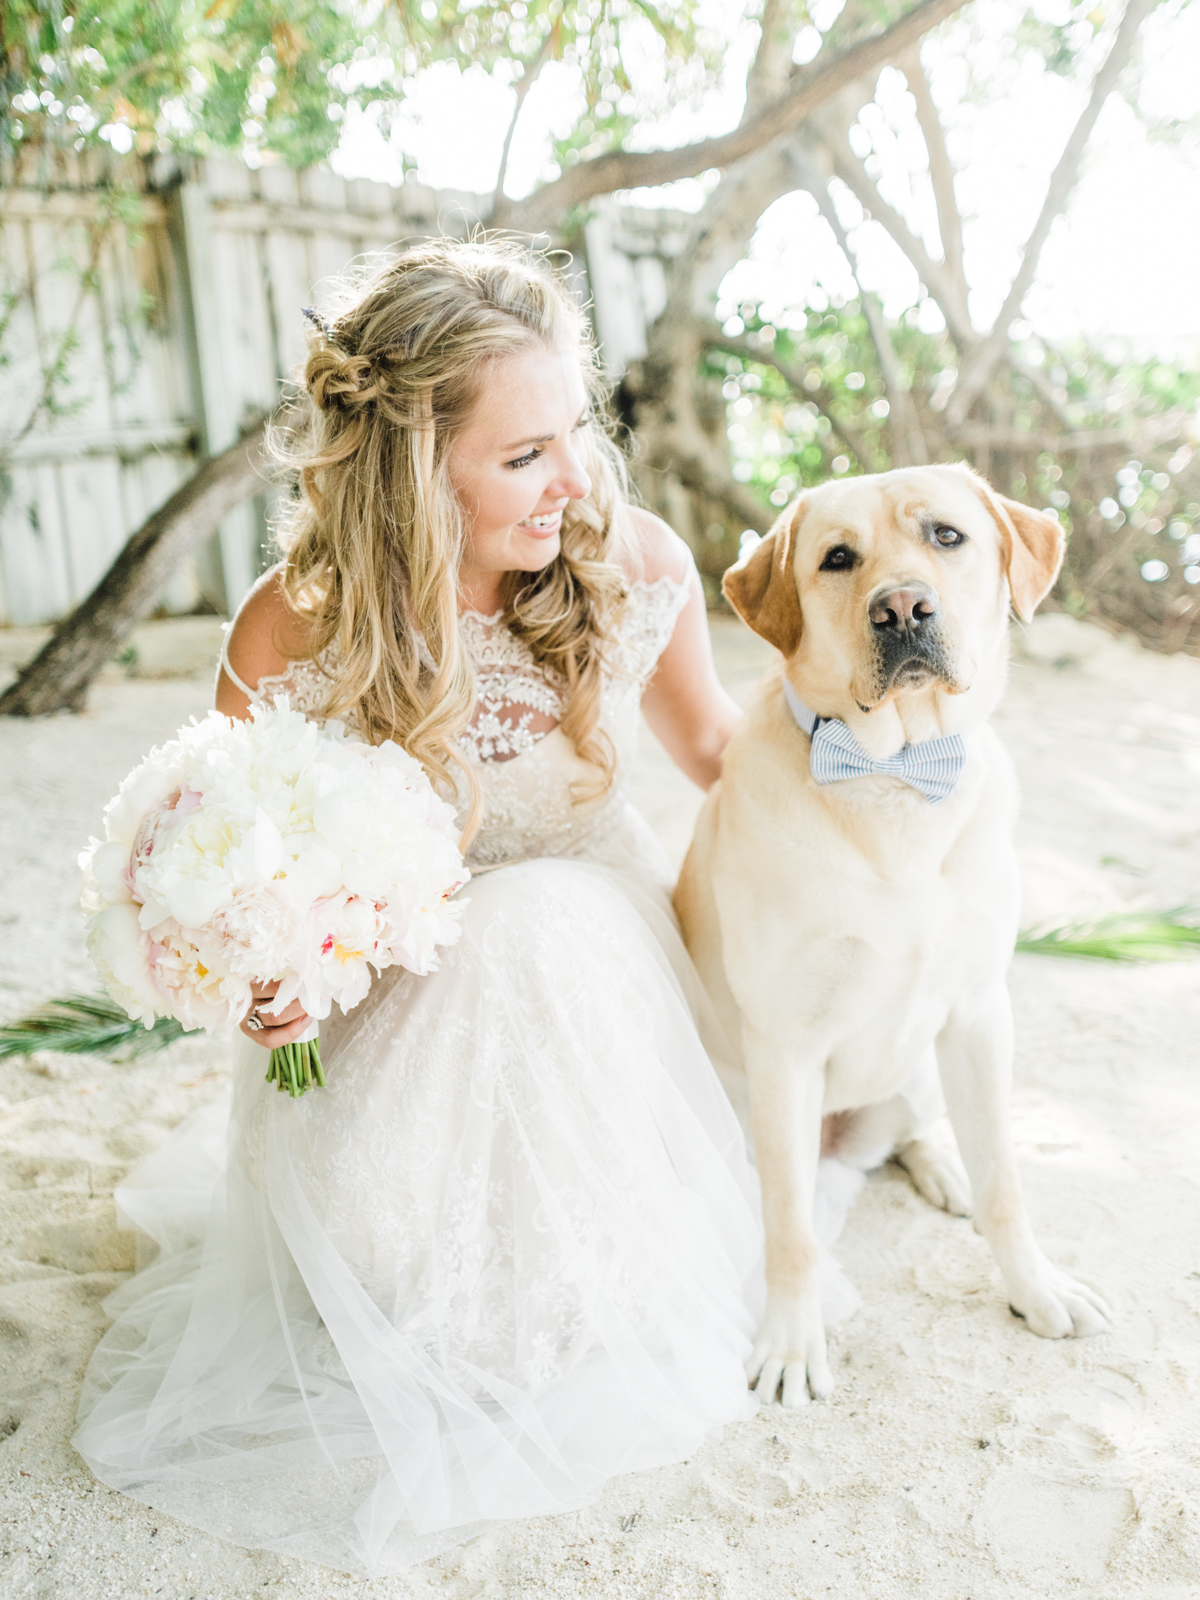 Puppy friendly wedding at Islamorada Florida, featured on Style Me Pretty